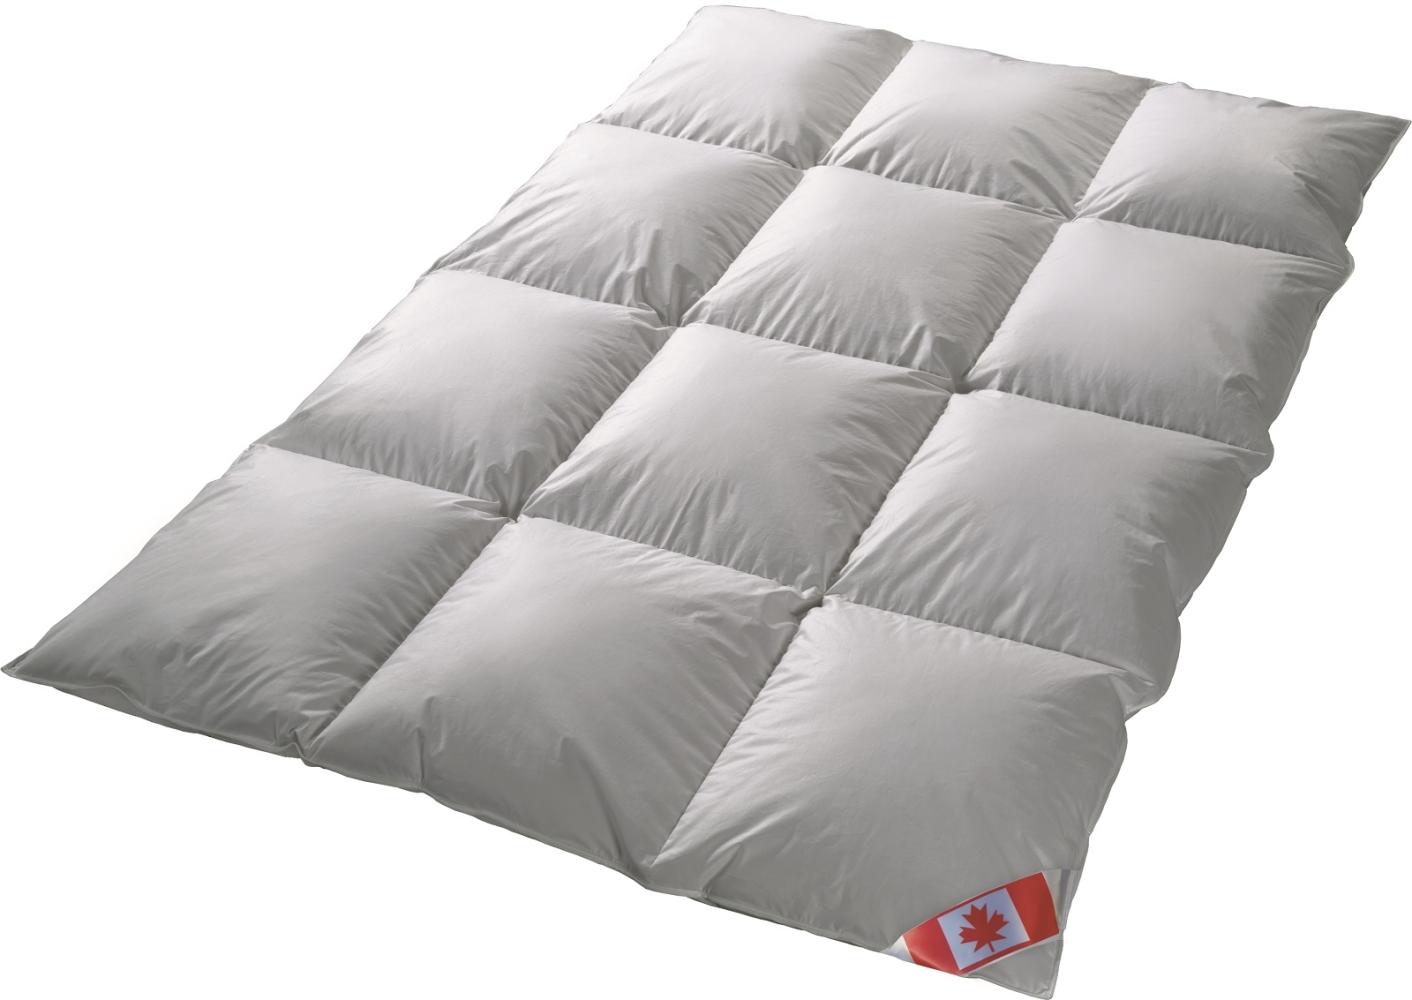 Canada extra warme Winter Decke Kassetten Hochsteg 100% Daune 135x200 cm C5 Bild 1